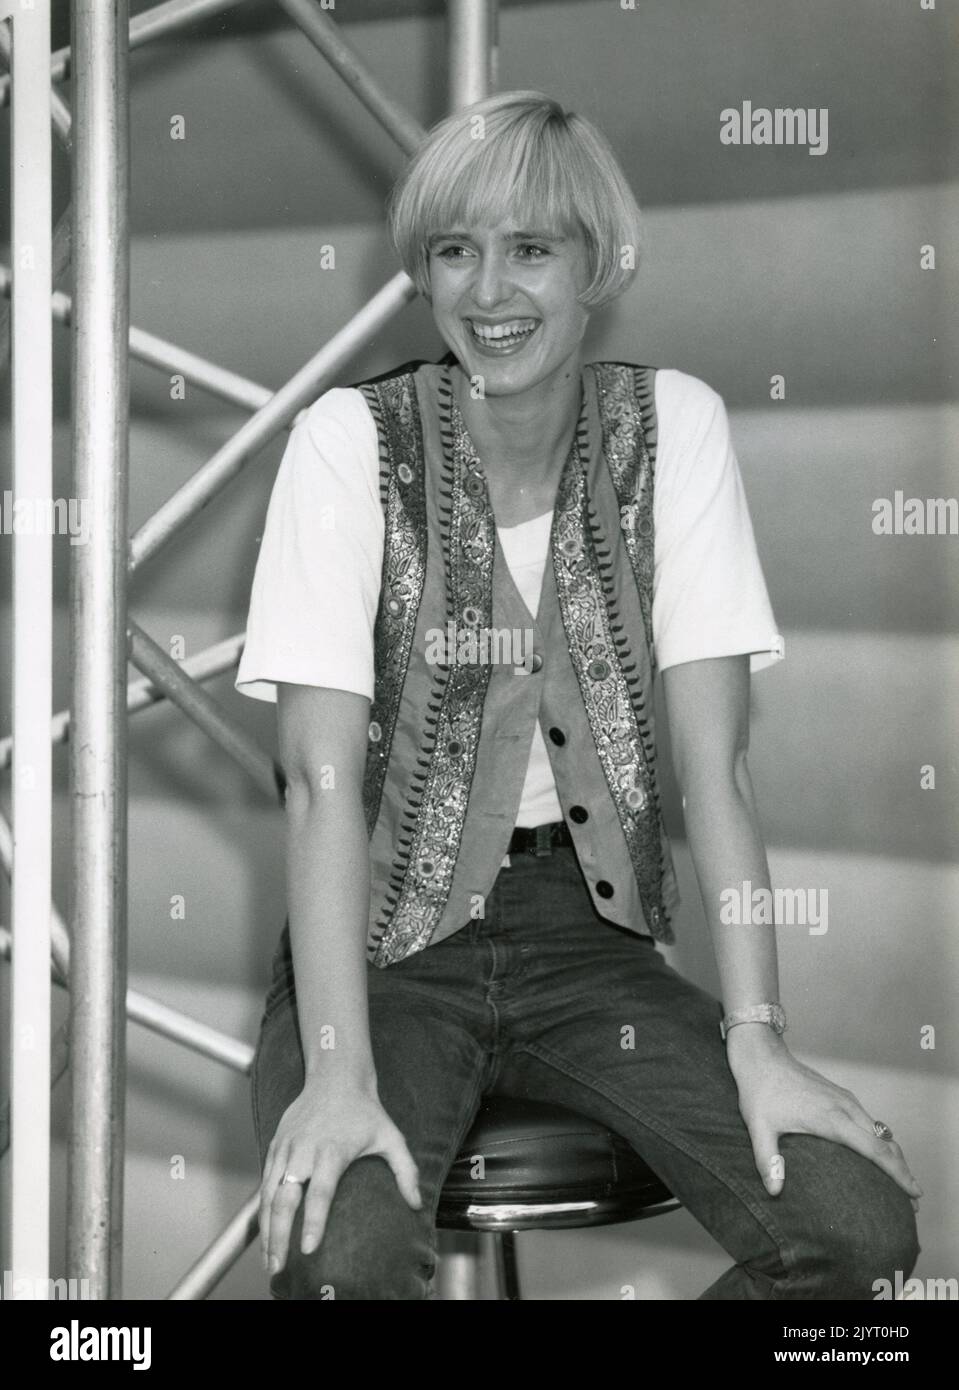 German television moderator Martina Behrens, Germany 1990s Stock Photo